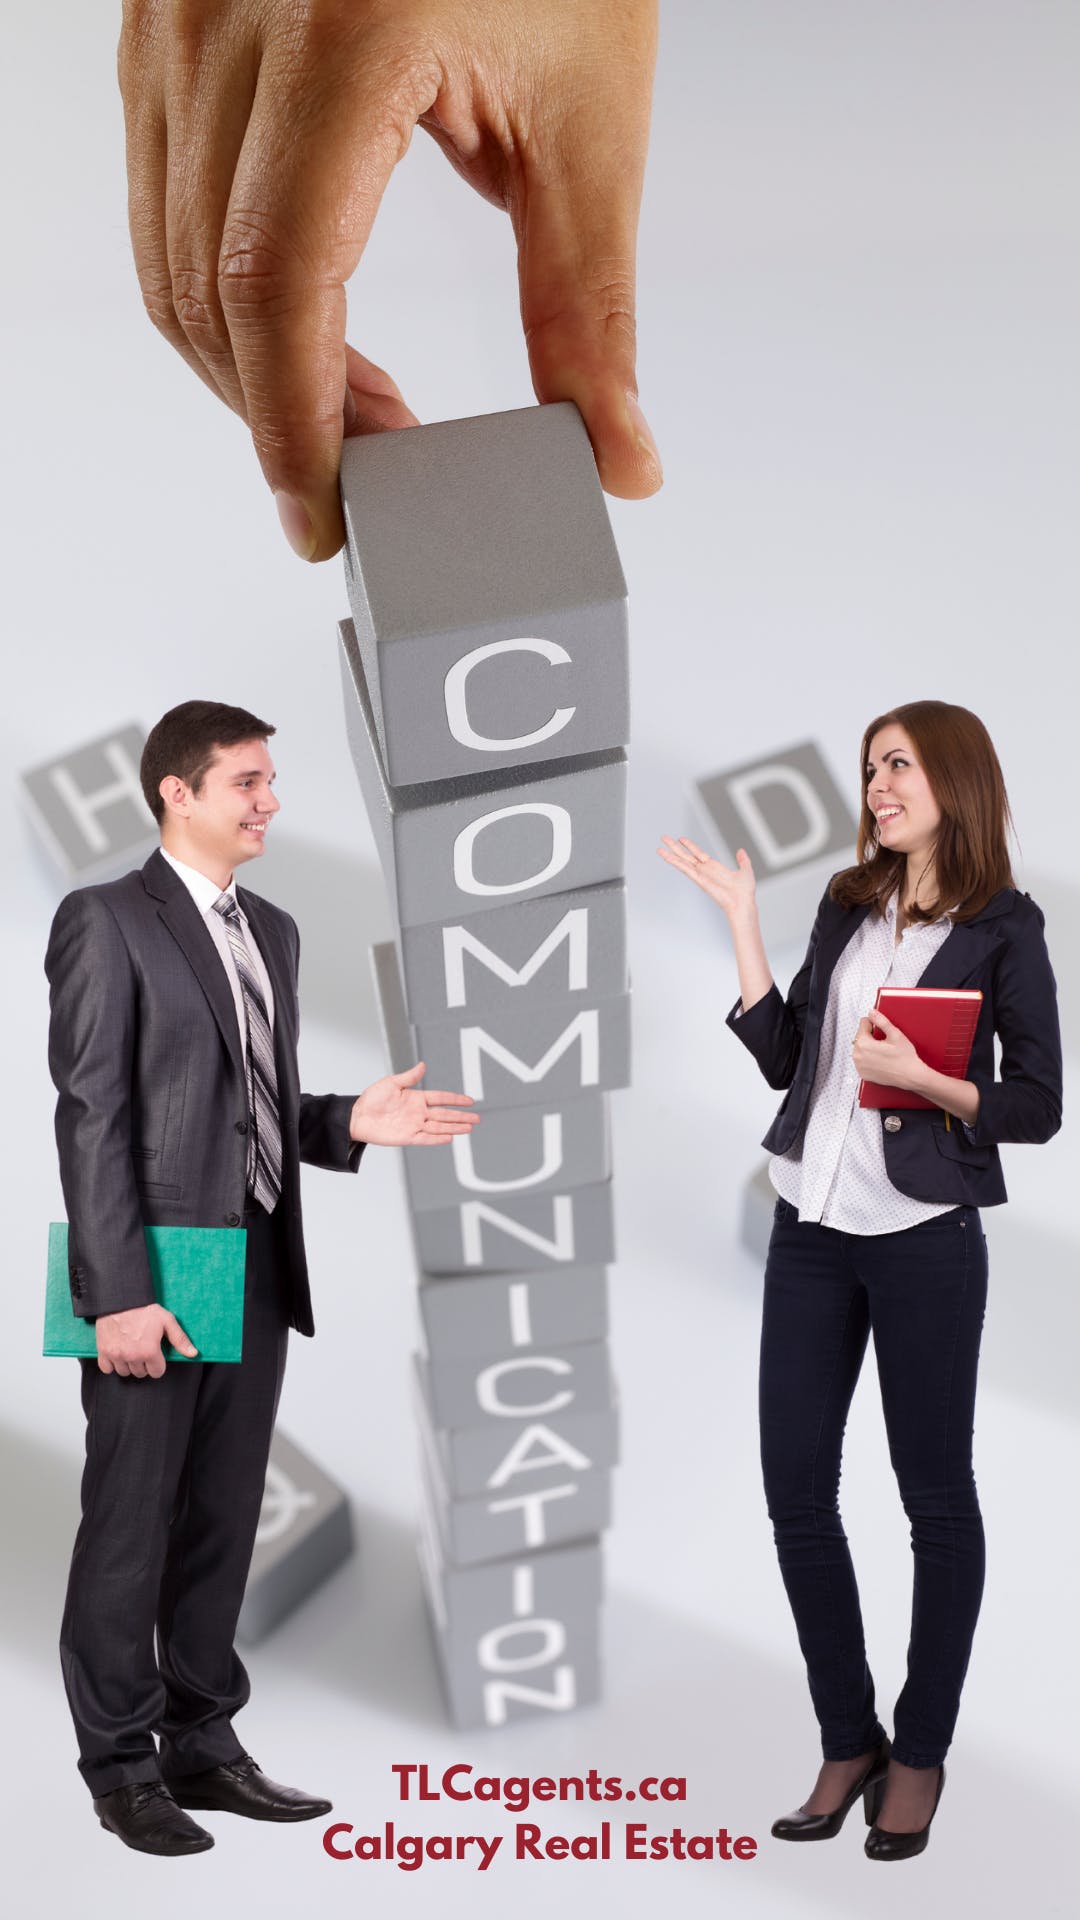 Business people- communication